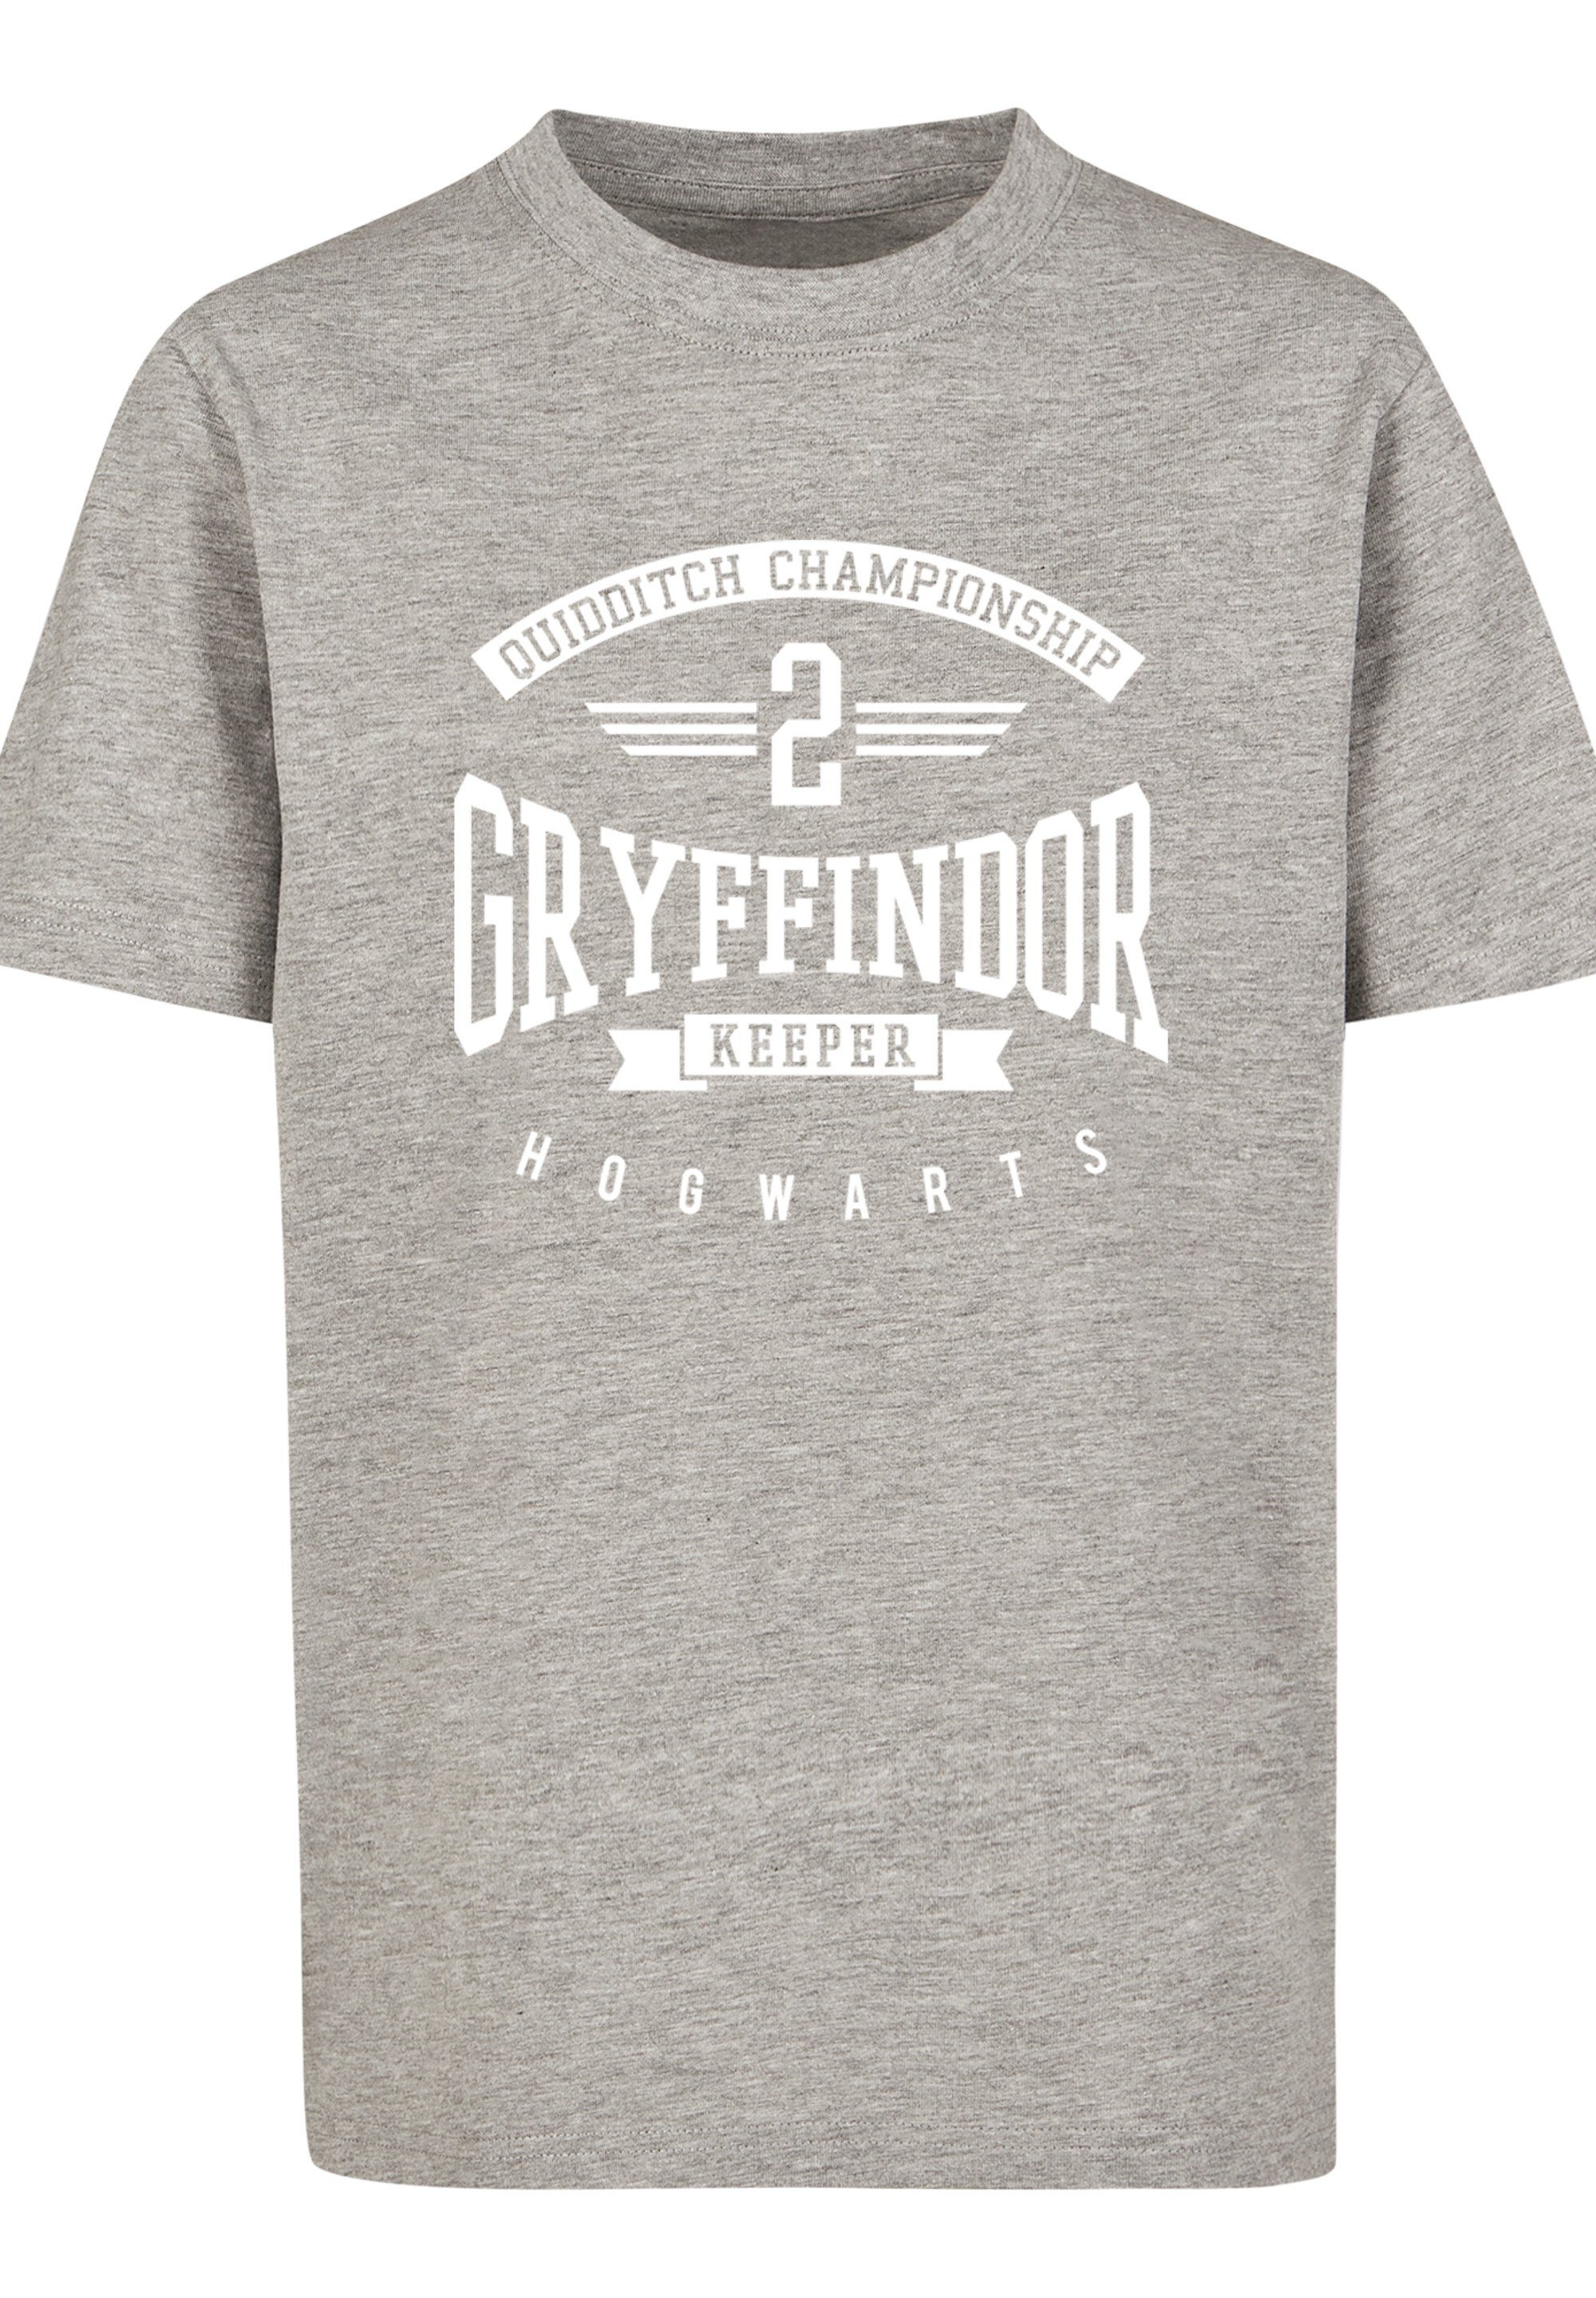 heather Harry Print Potter Keeper F4NT4STIC grey Gryffindor T-Shirt